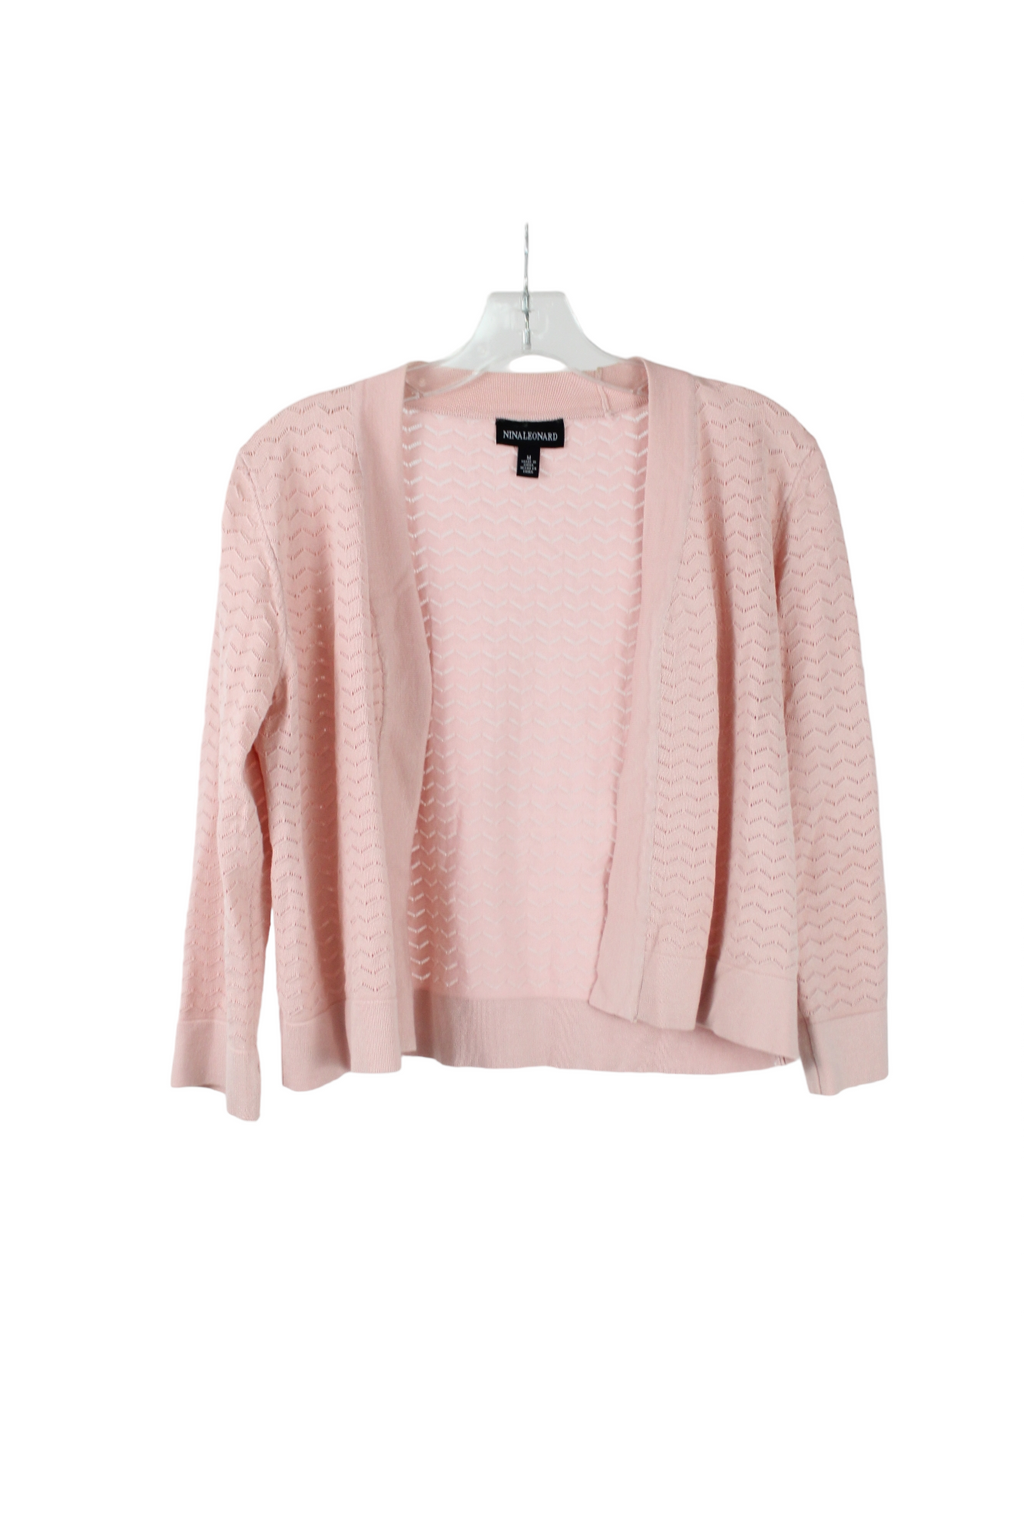 Nina Leonard Pink Knit Cardigan | M